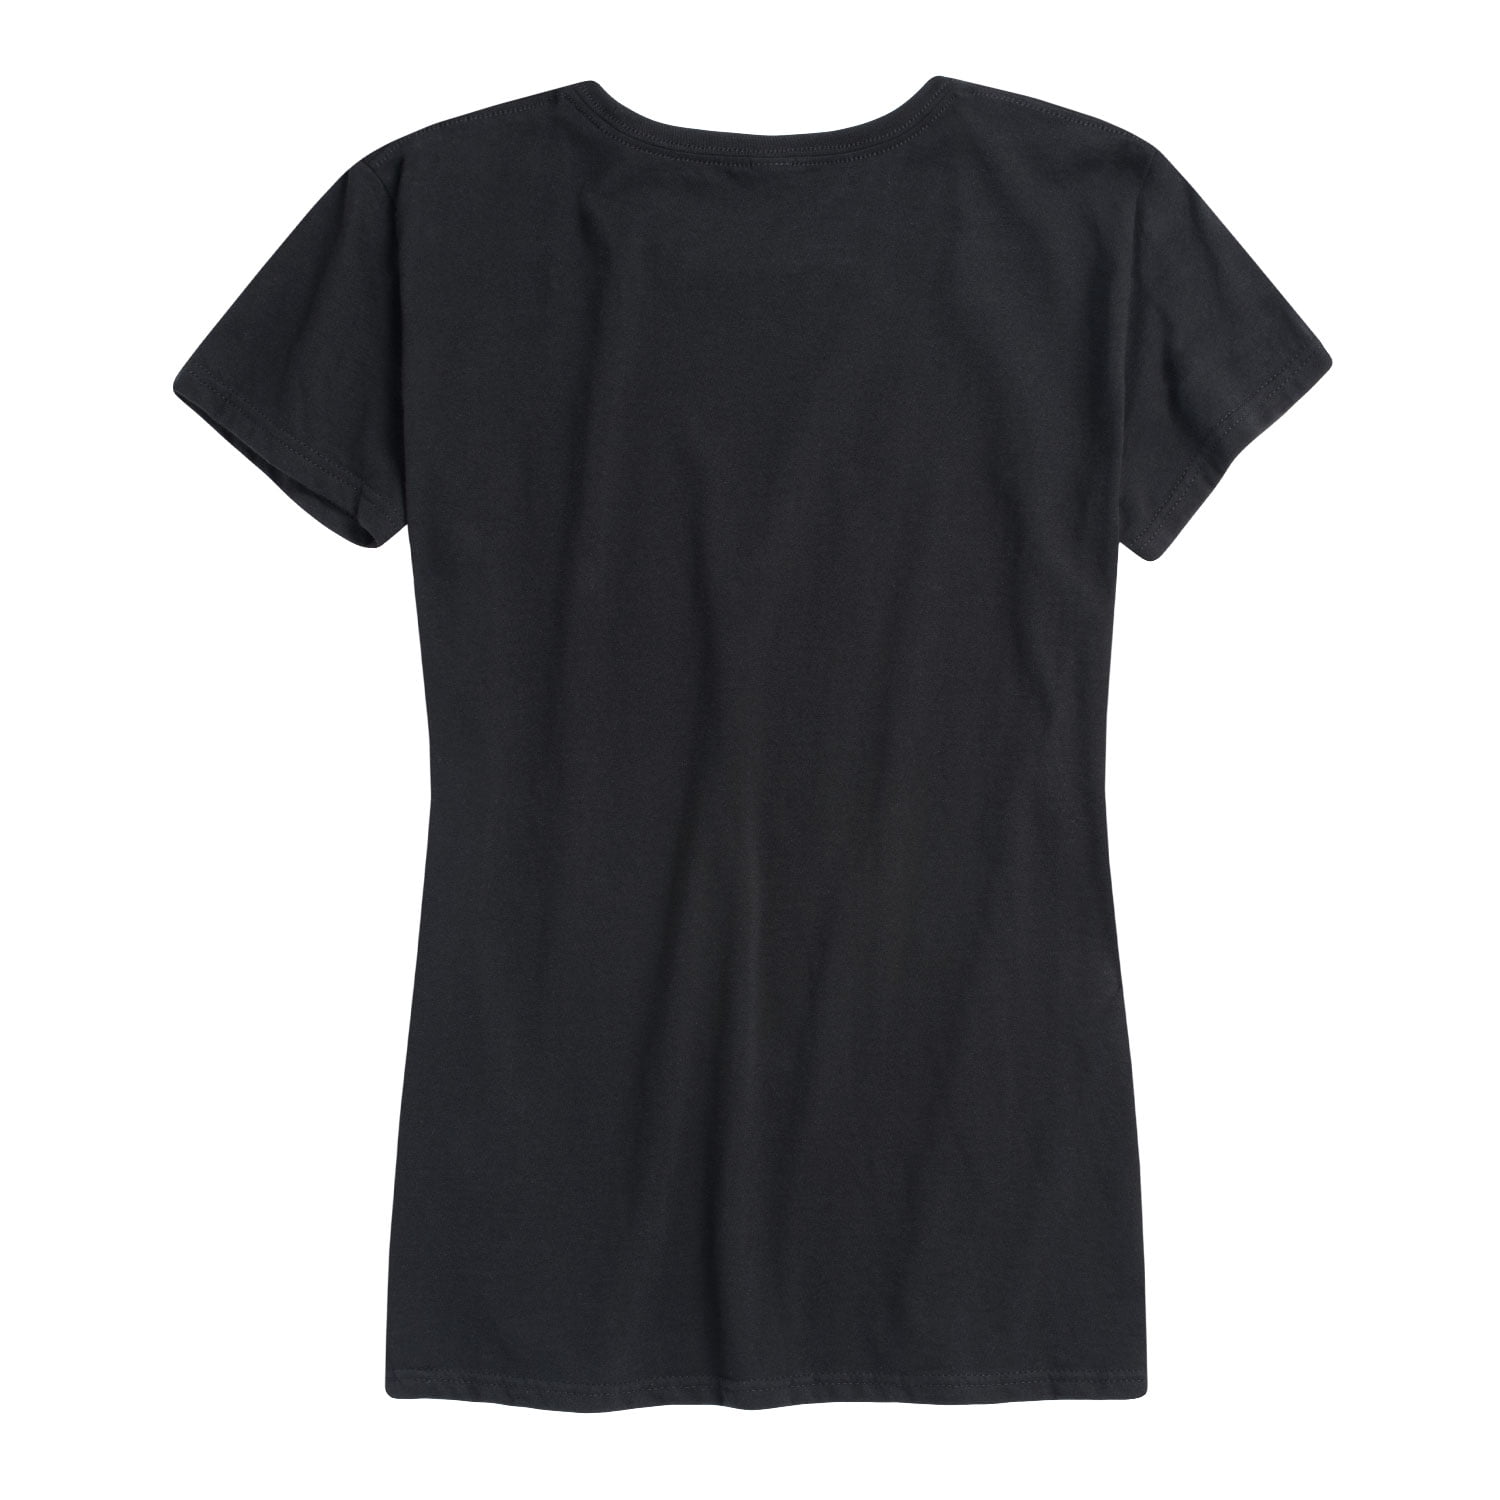 ACDC - Thunderstruck - Women's Short Sleeve Graphic T-Shirt